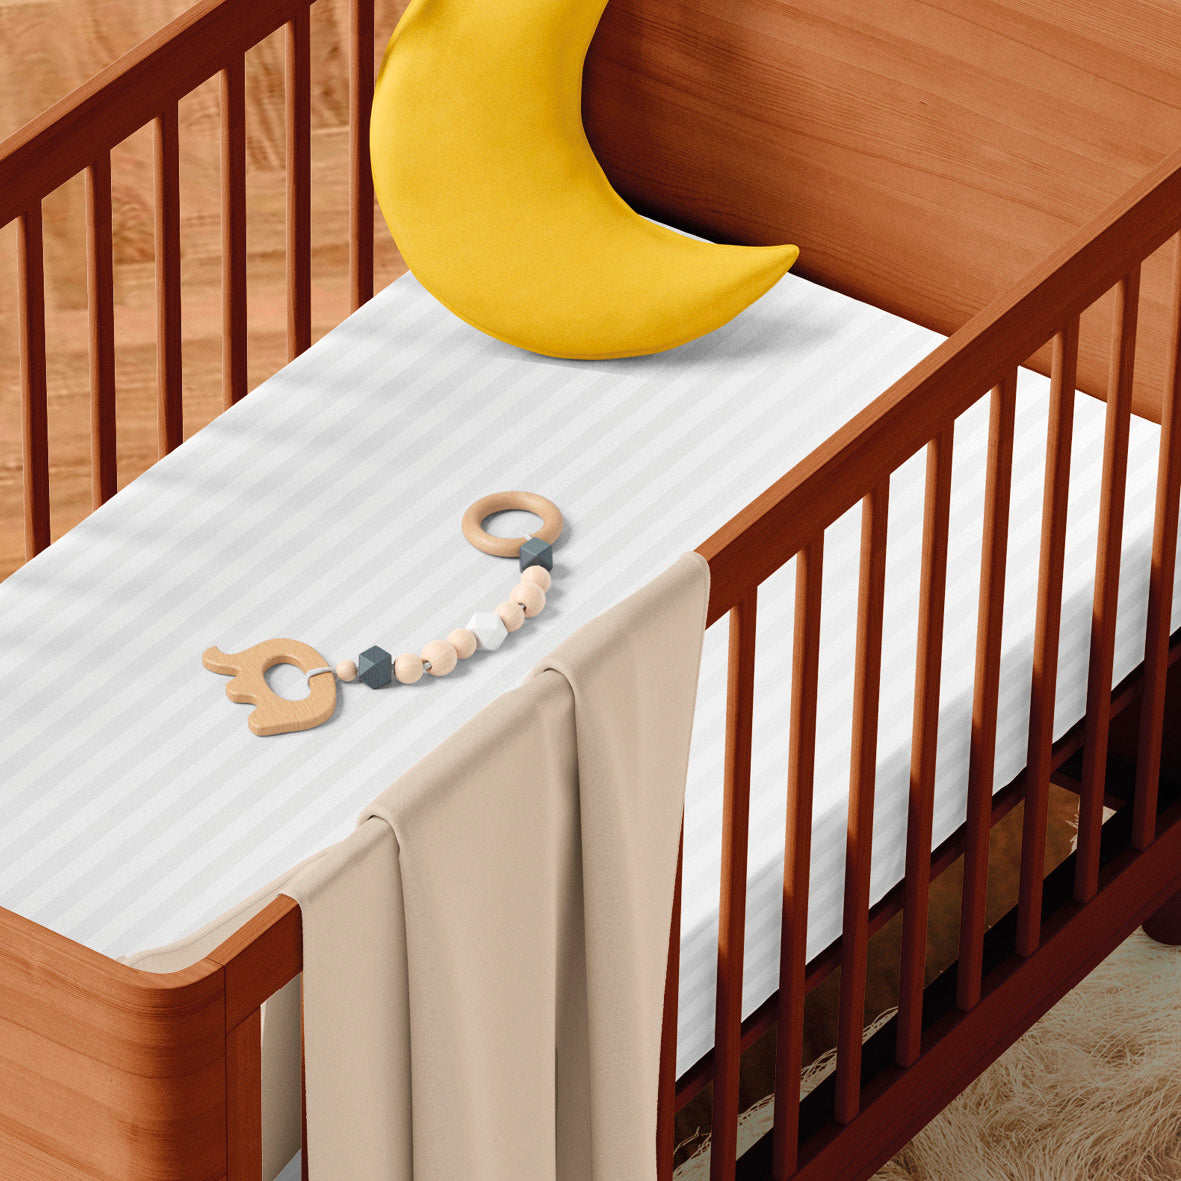 Bettbezug + Kopfkissenbezug Baby Baumwollsatin - Jacquard gewebt - gestreift Weiß